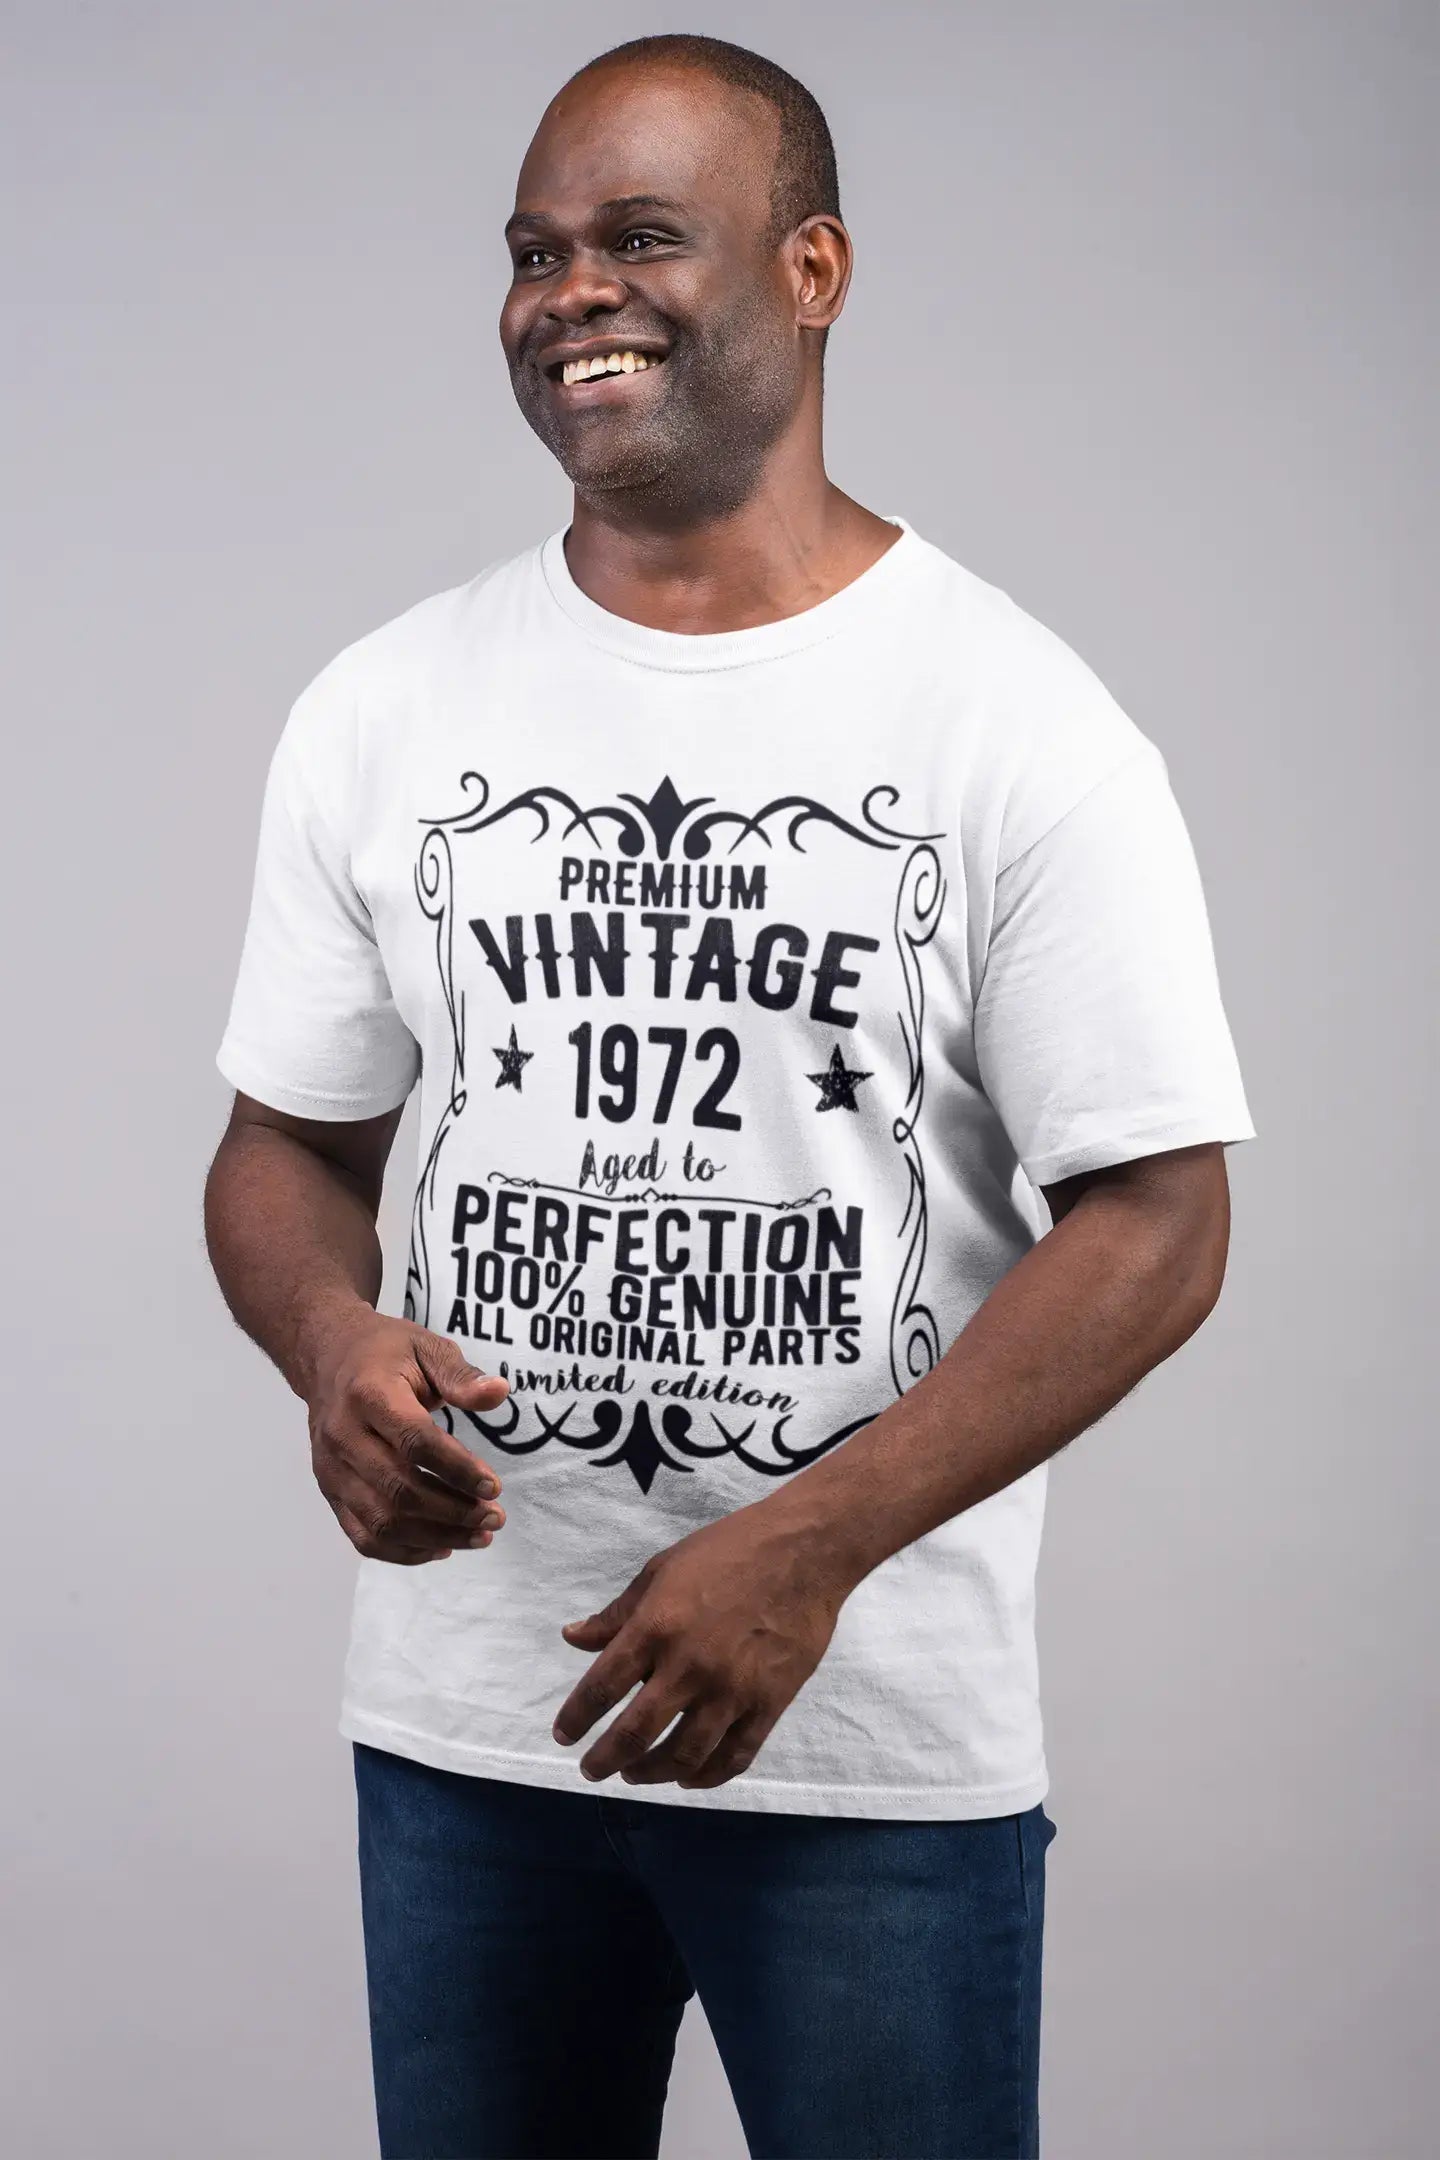 Premium Vintage Year 1972, White, Men's Short Sleeve Round Neck T-shirt, gift t-shirt 00349